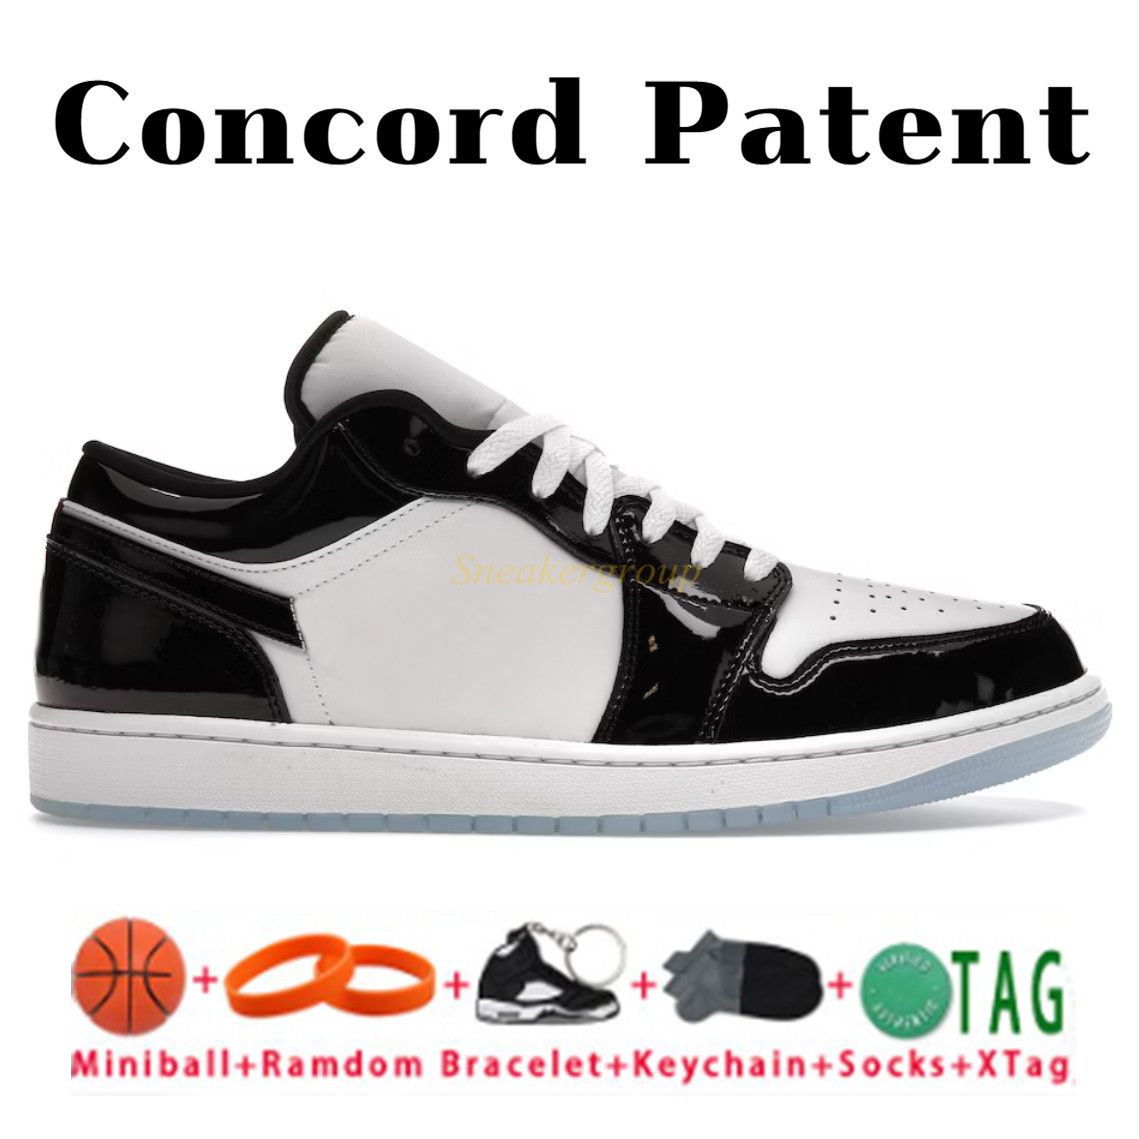 6. Patent Patent Concord